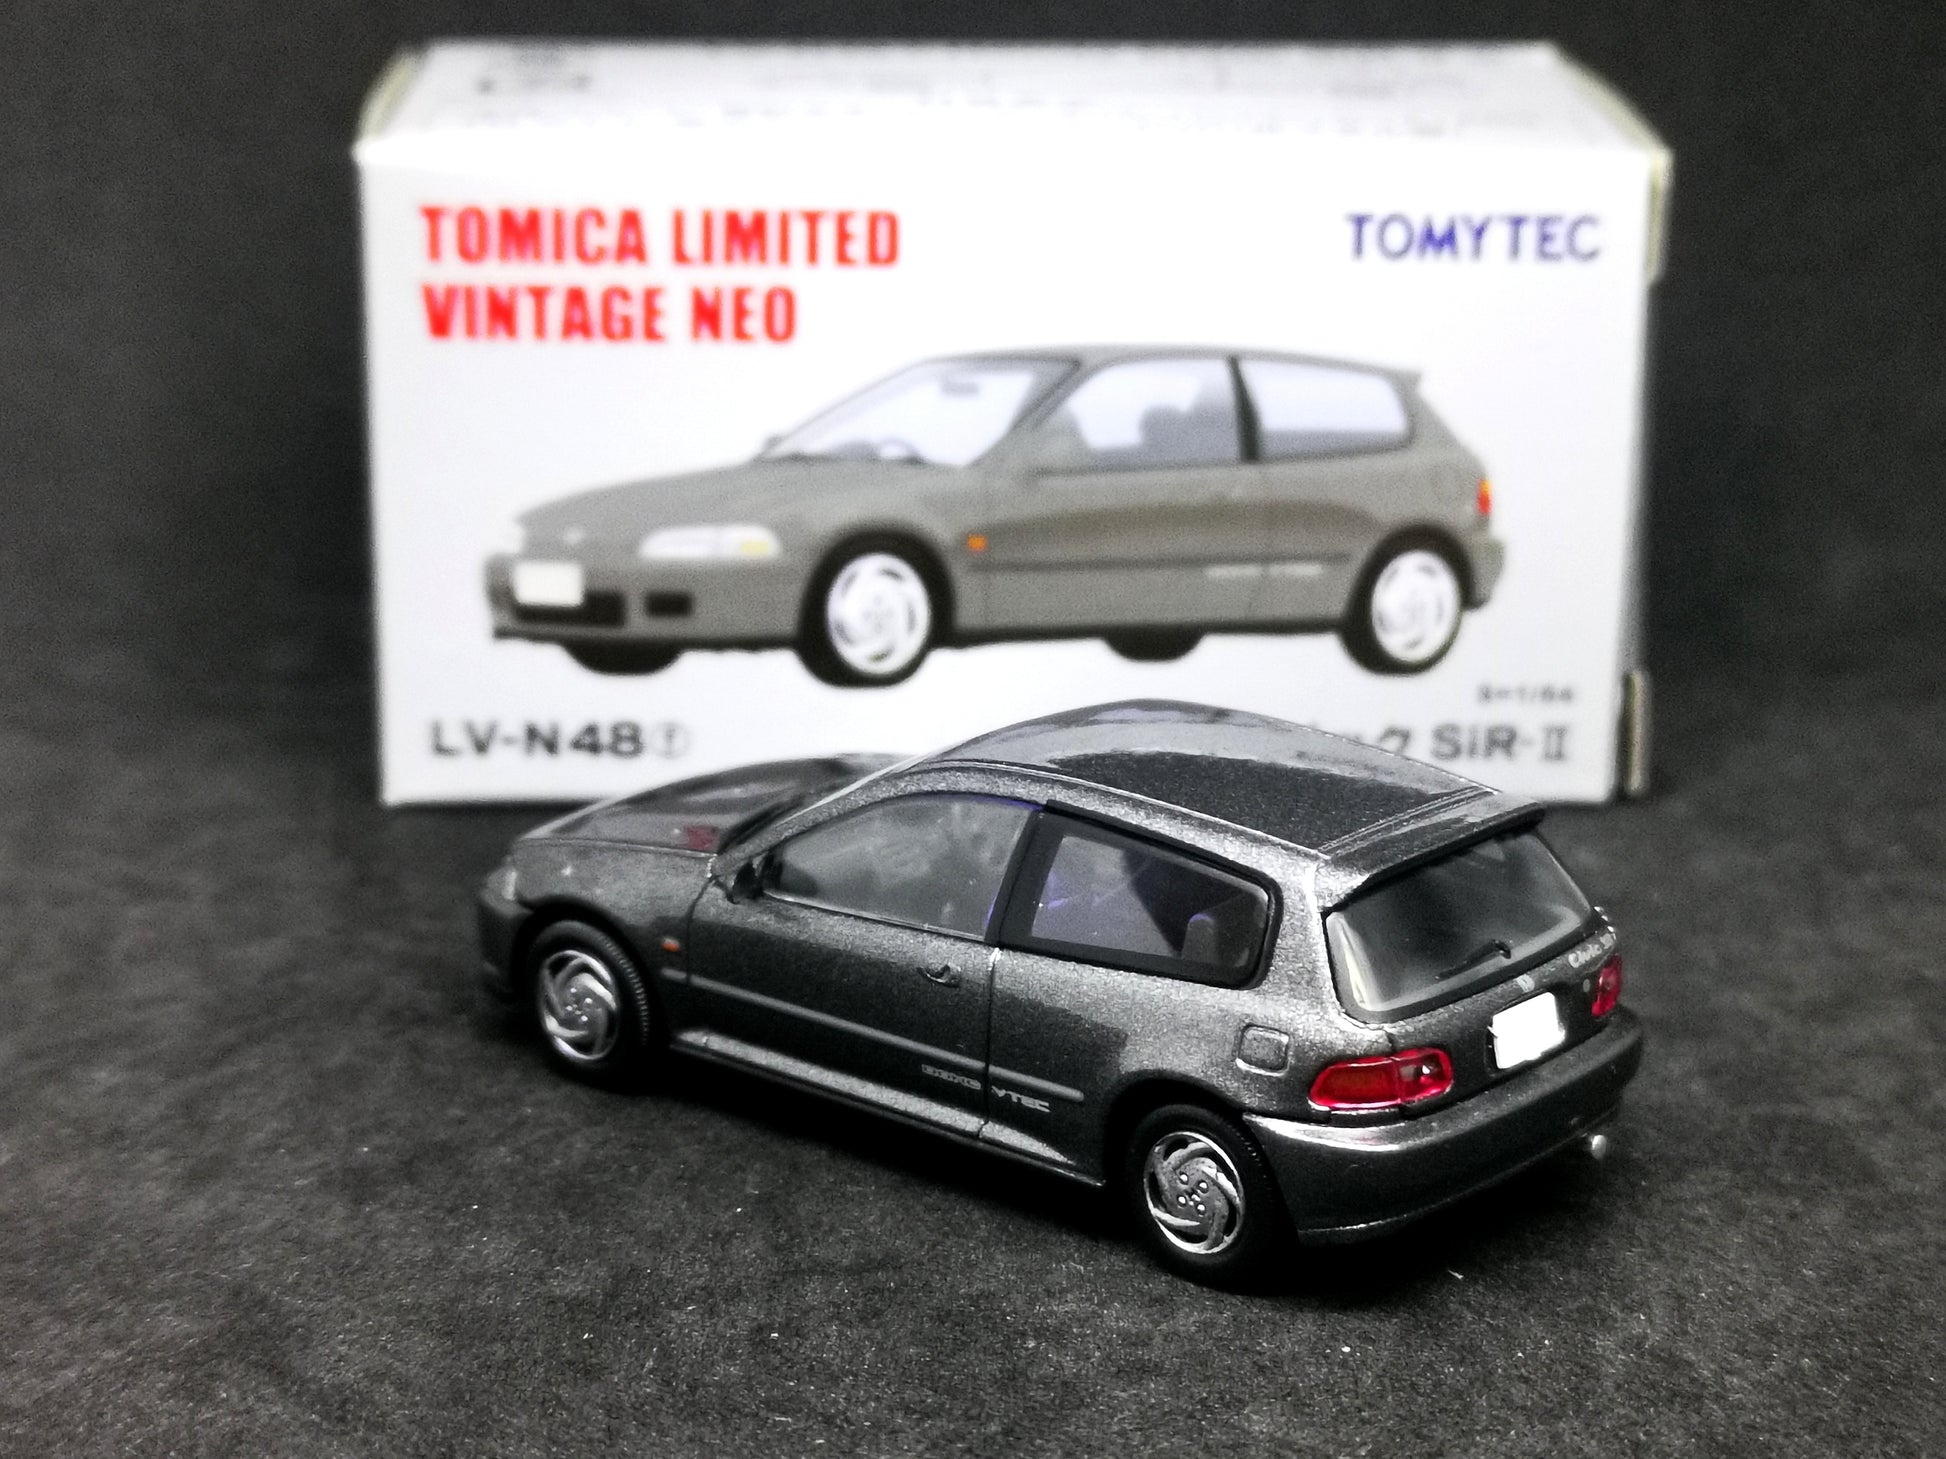 Tomica Limited Vintage Neo LV-N48f Honda Civic SiR-II Takara Tomy